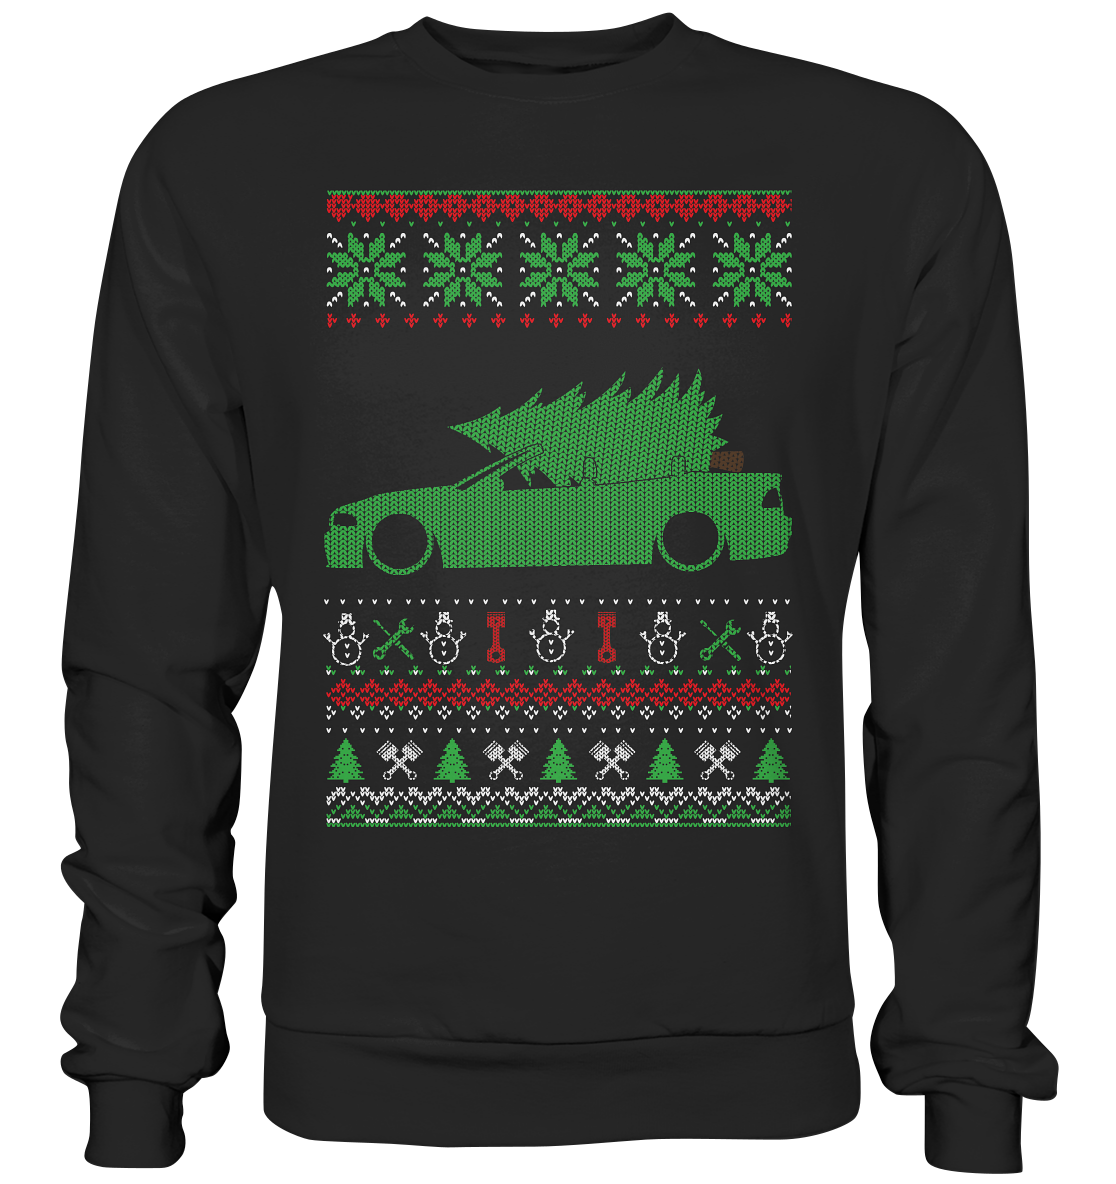 CODUGLY_BGKE46C - Premium Sweatshirt